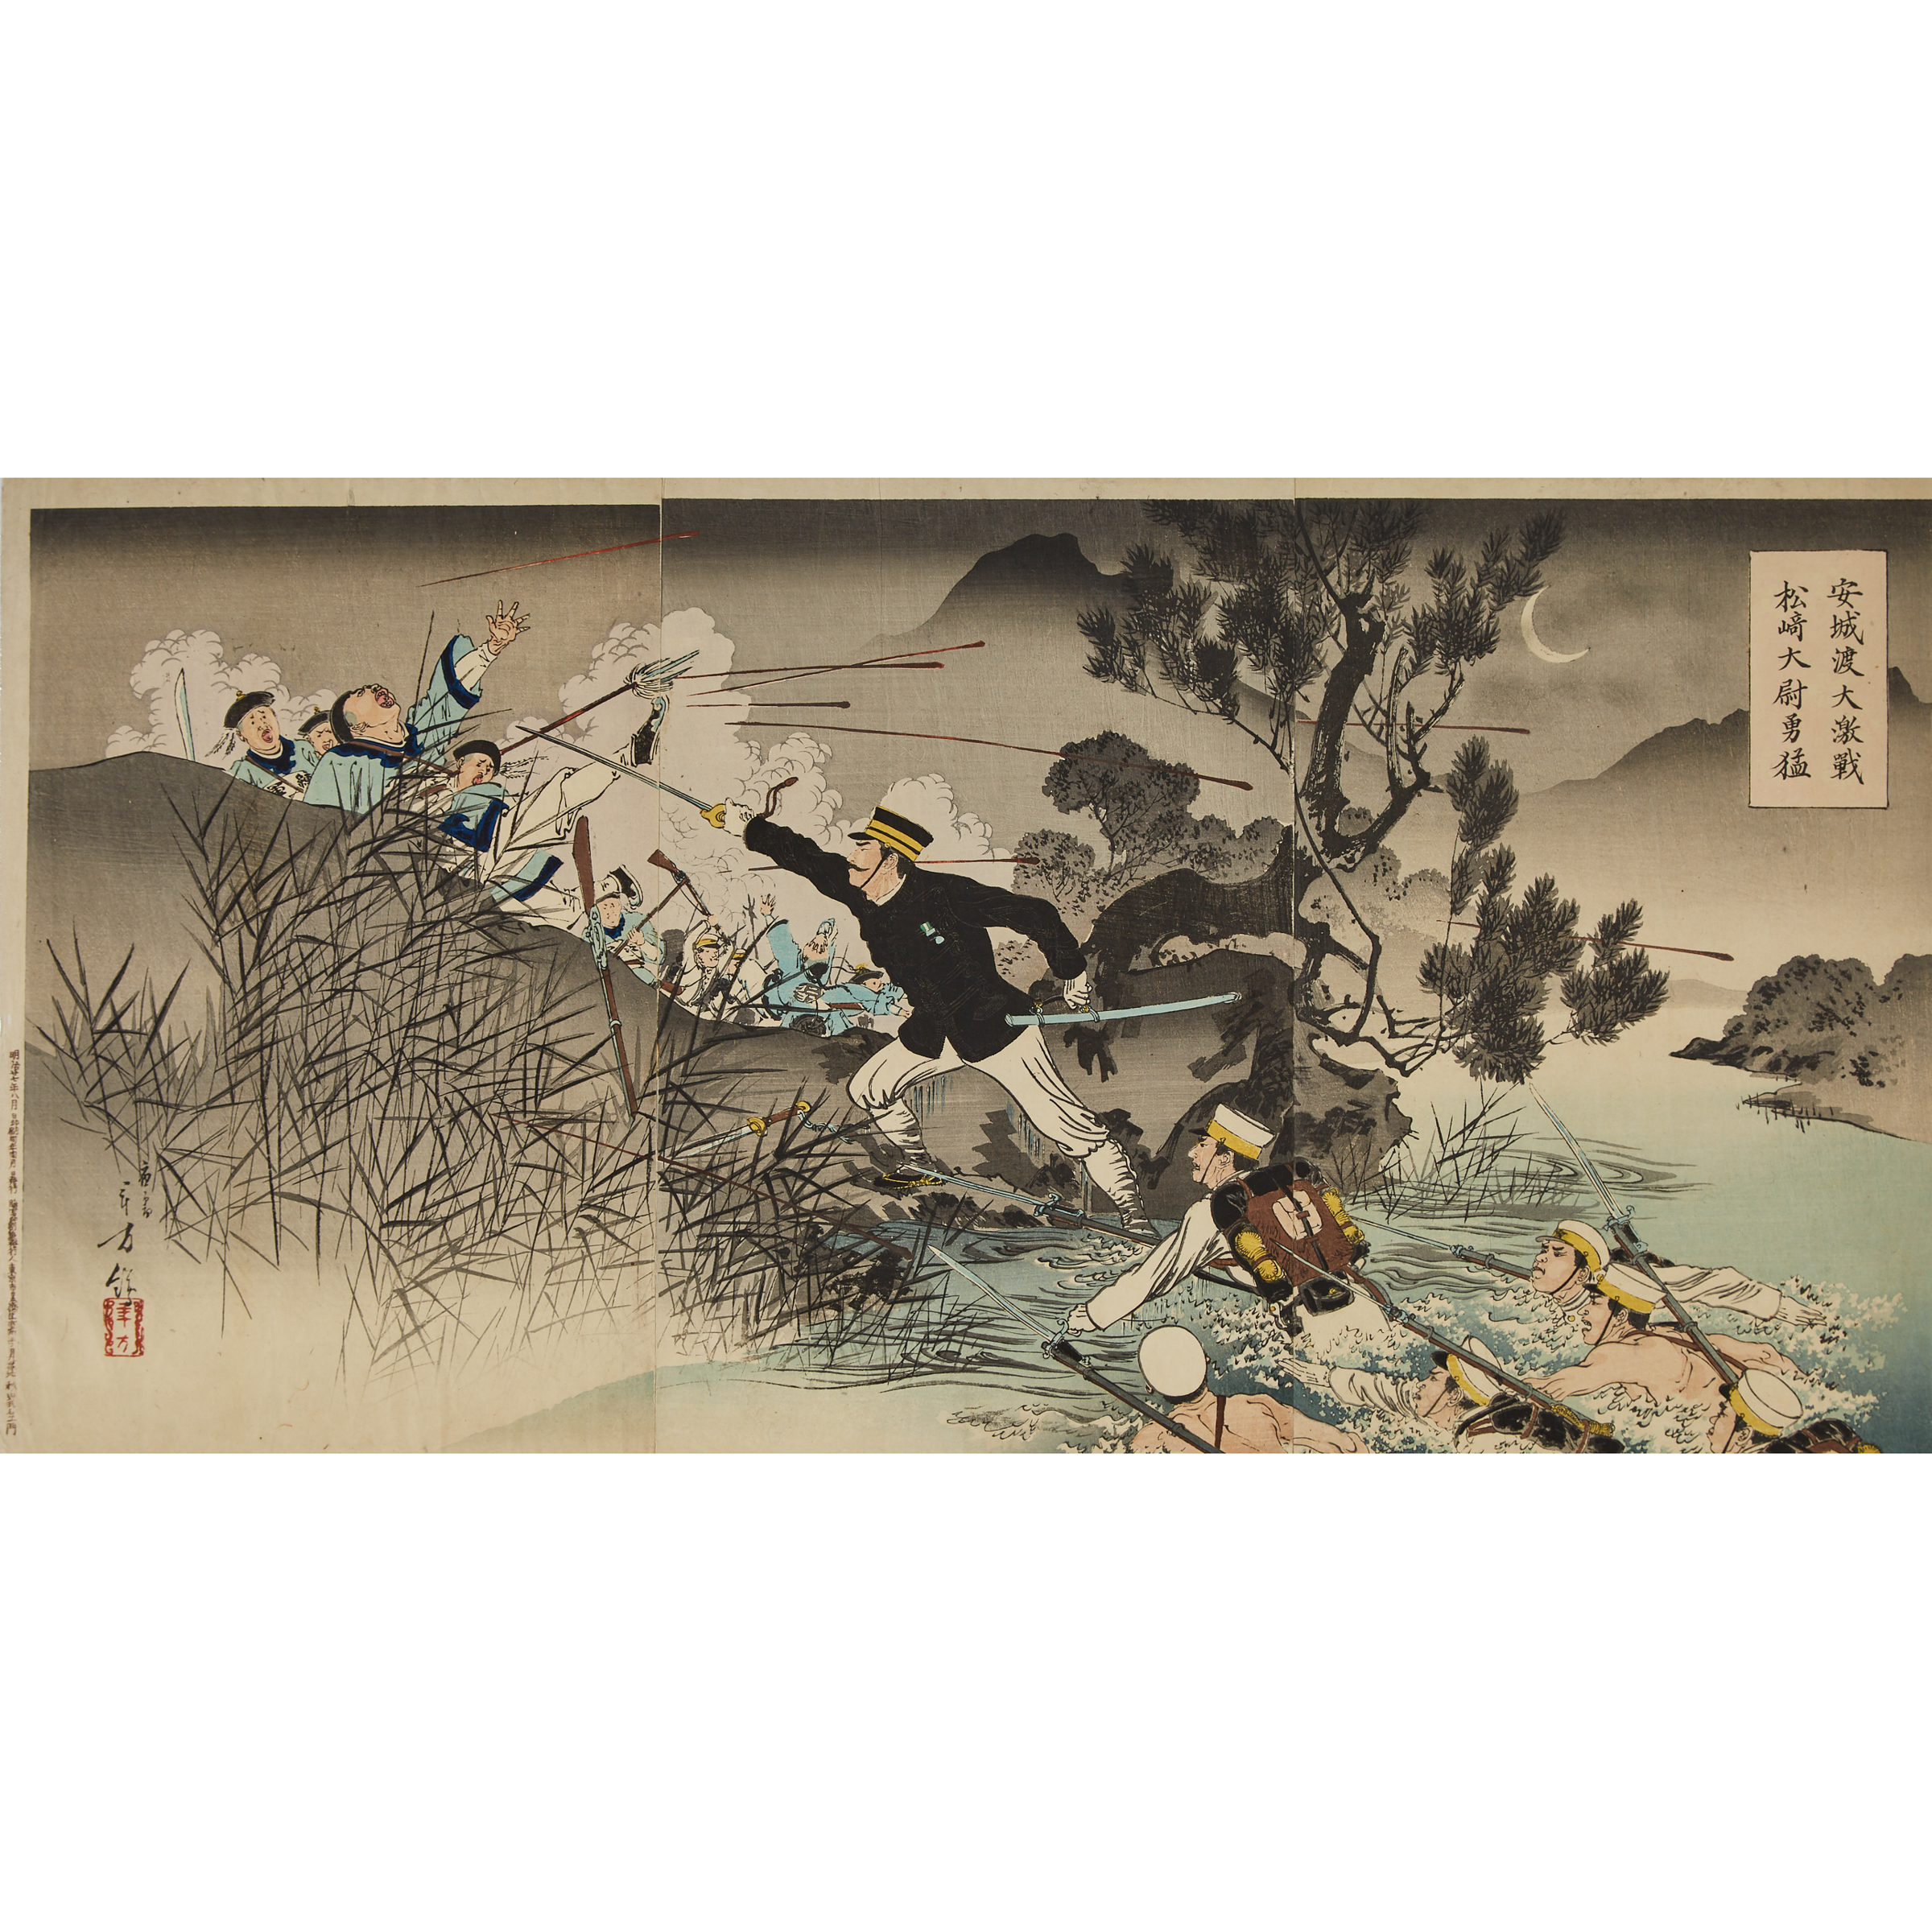 Mizuno Toshikata (1886-1908), The Great Battle of the Ansong Ford: The Valor of Captain Matsuzaki, 1894